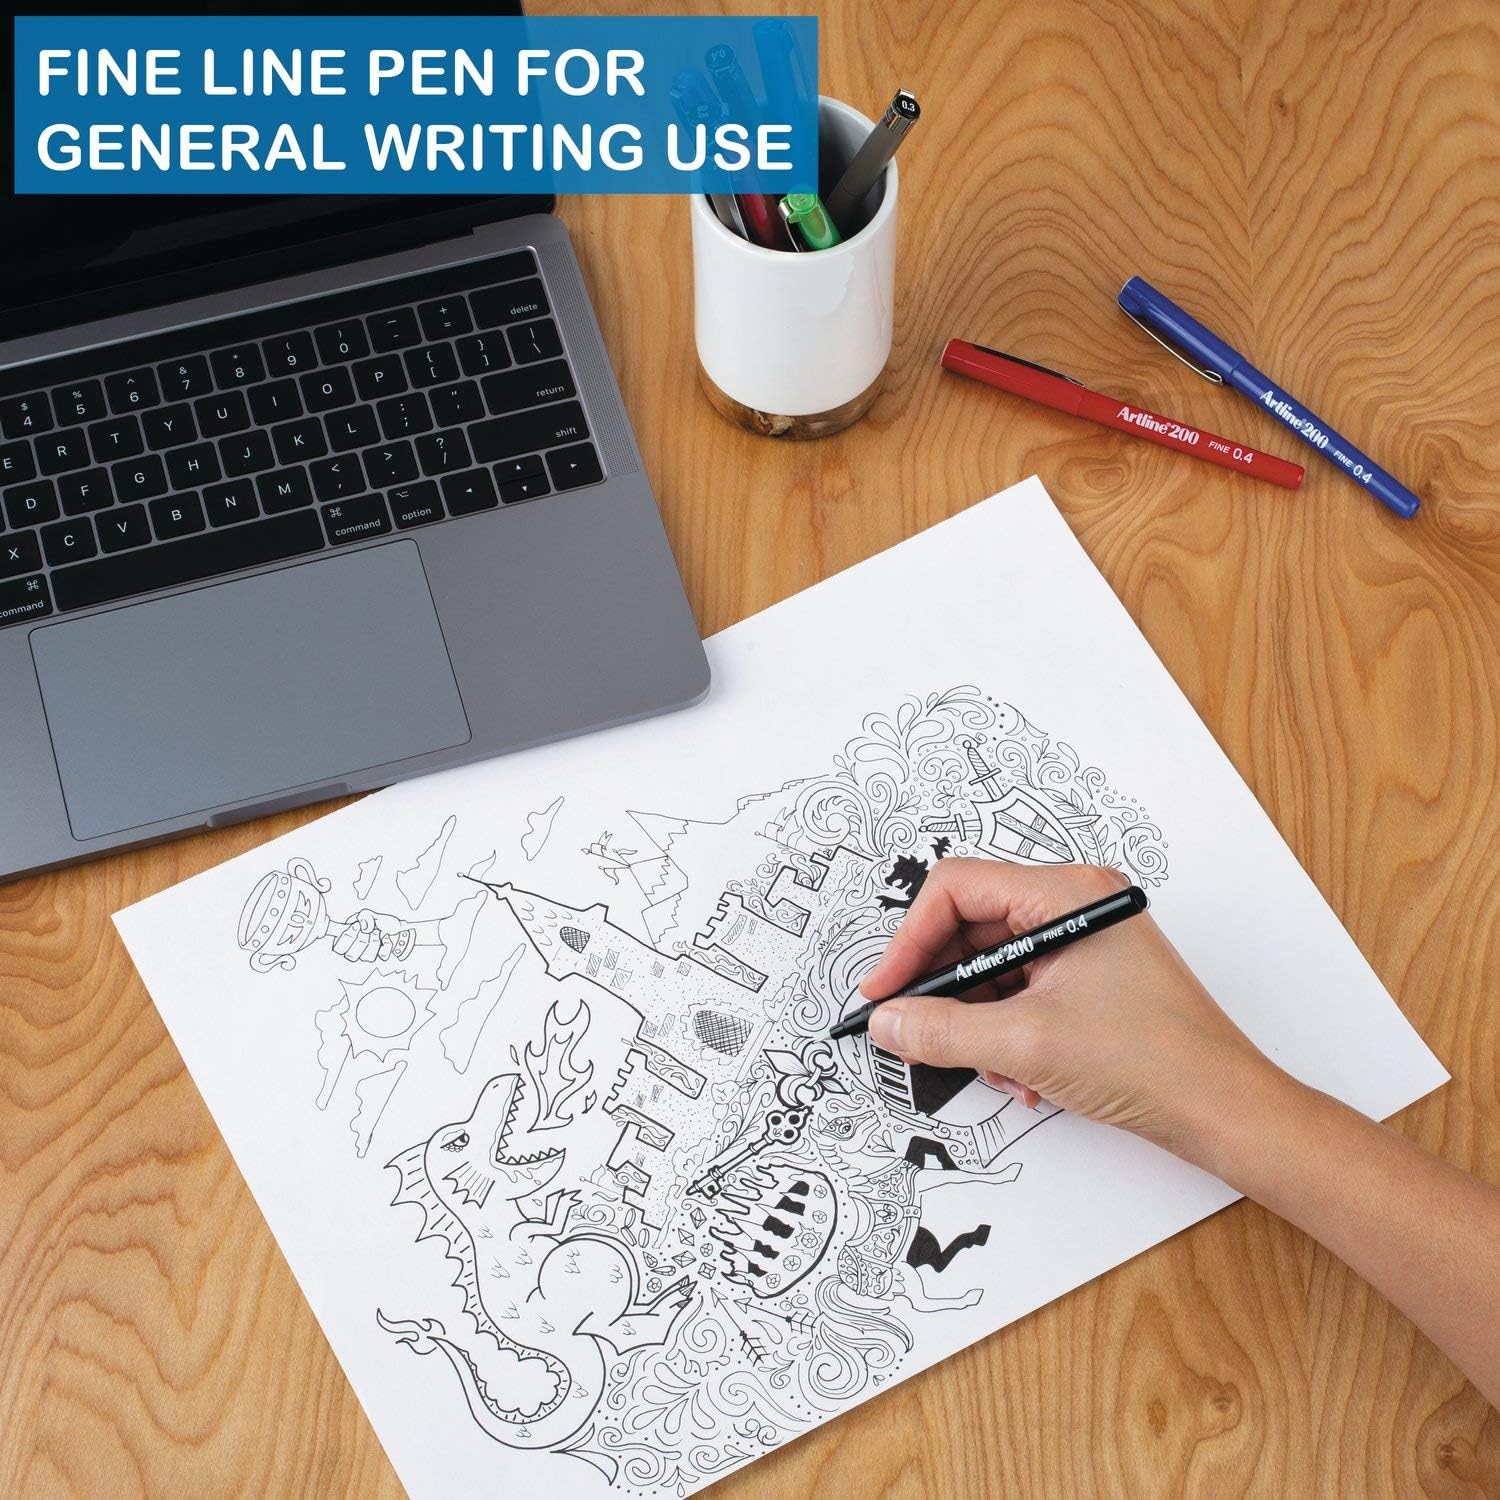 Artline 200 Fineliner Writing Pens, 0.4mm Assorted Colors, 4 Pack